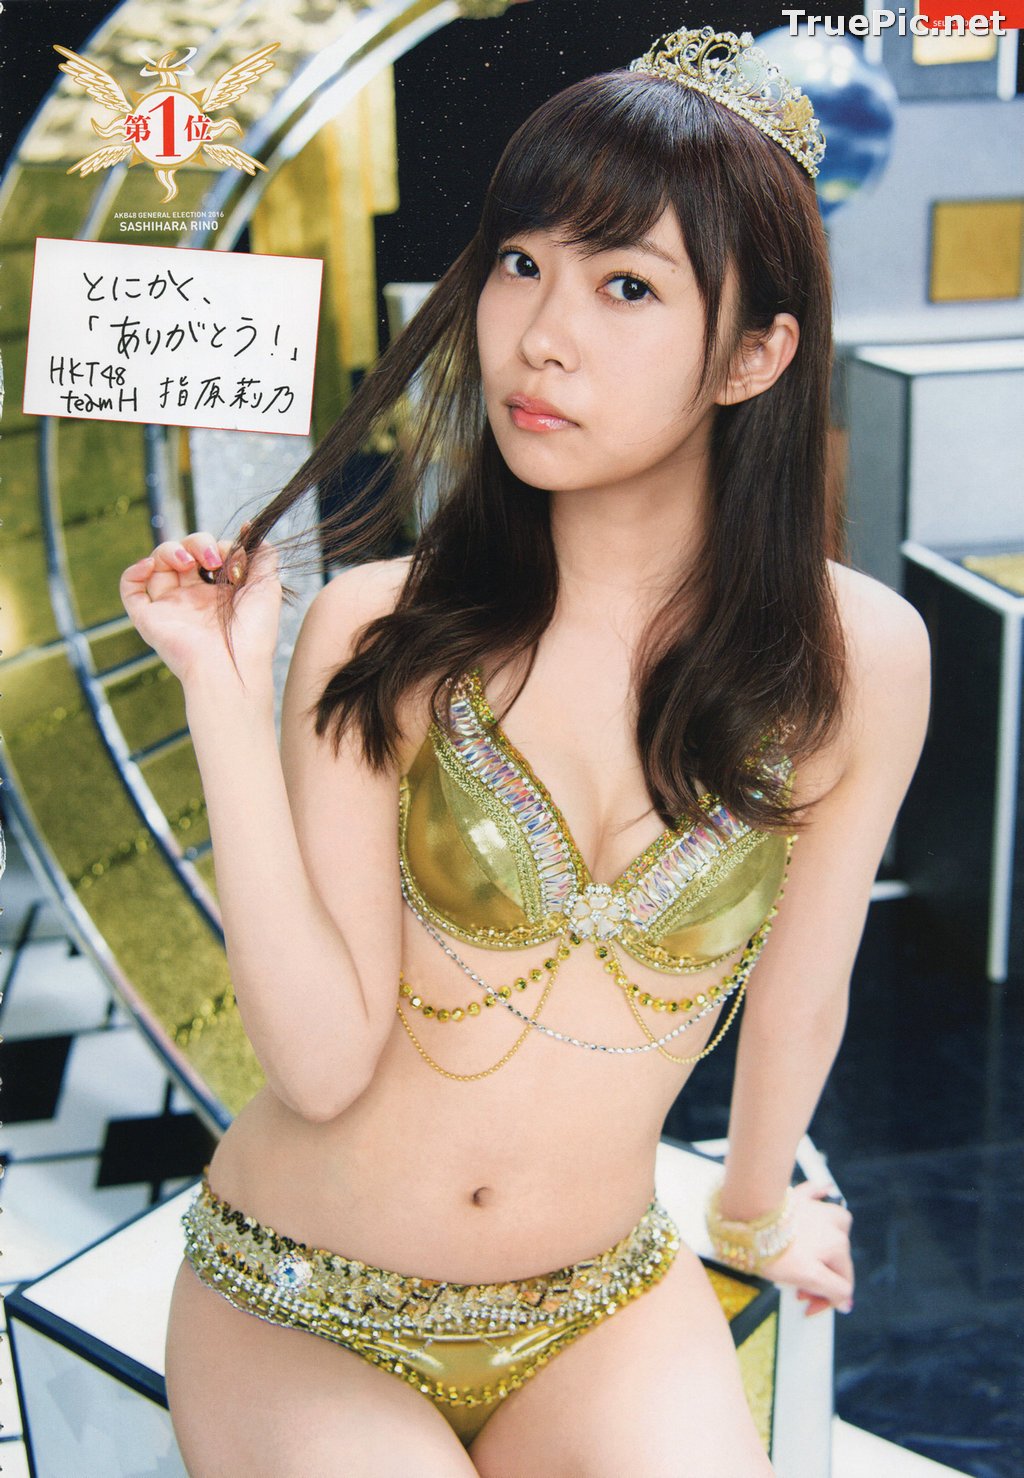 Image AKB48 General Election! Swimsuit Surprise Announcement 2016 - TruePic.net - Picture-20